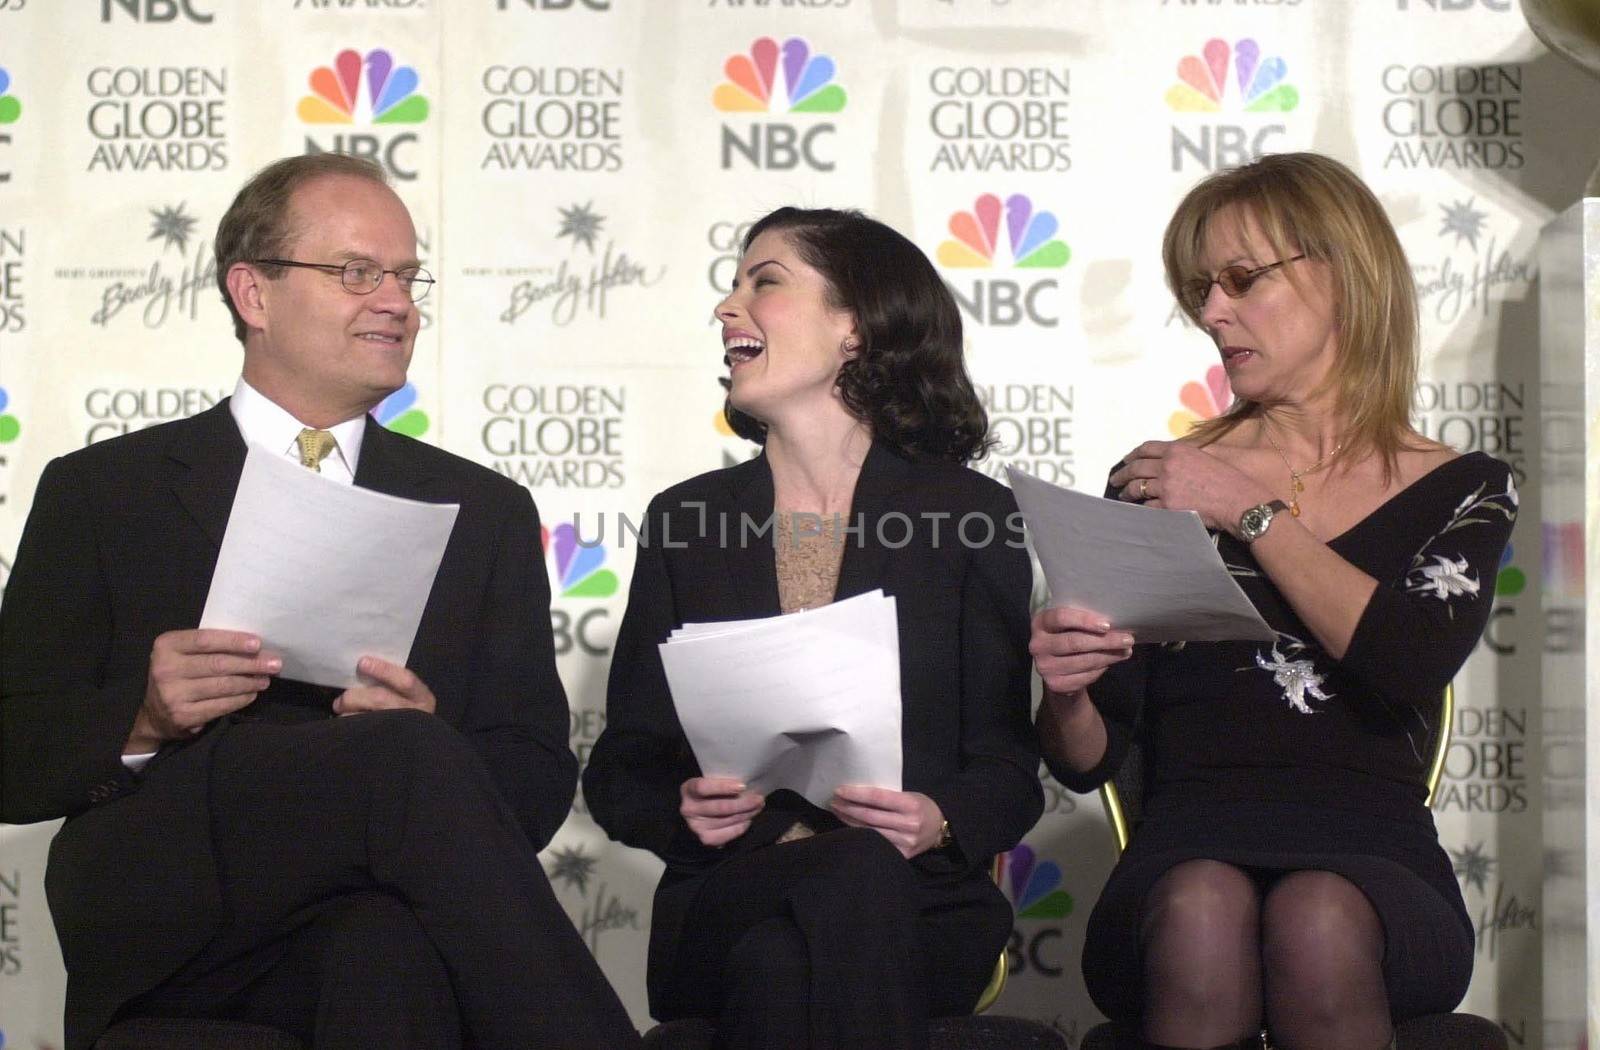 Kelsey Grammer, Lara Flynn Boyle, Christine Lahti at the 2000 Golden Globe Nominations Announcement, Beverly Hills, 12-21-00